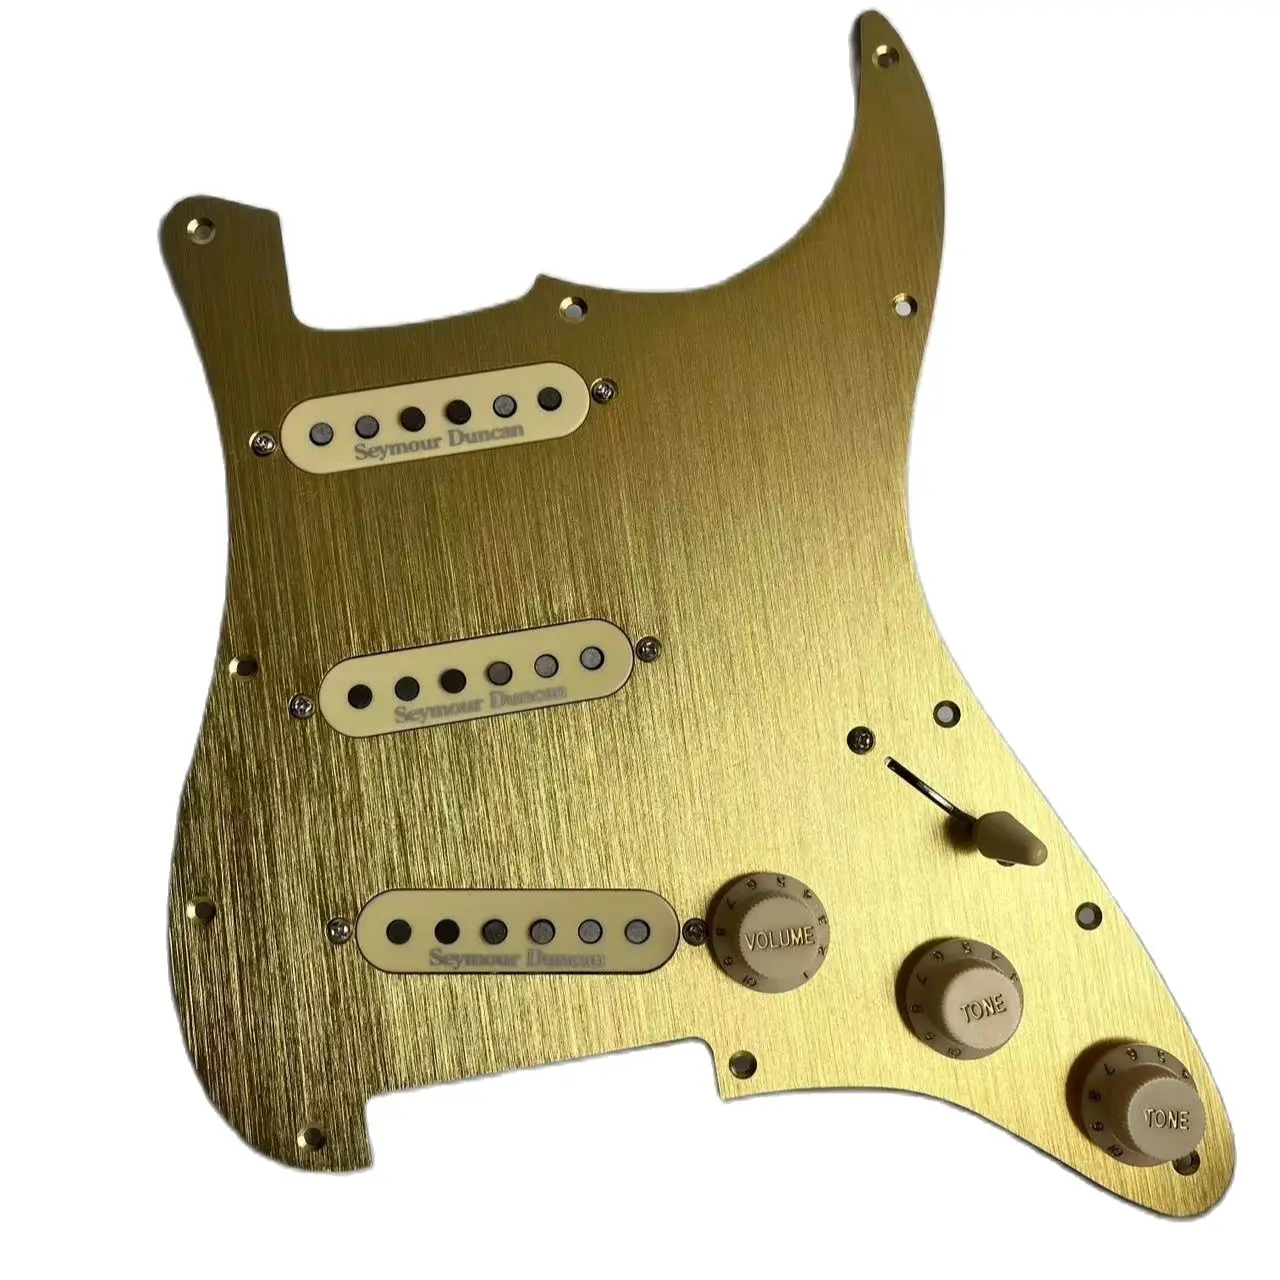 

Upgrade Loaded SSS Aluminum Panel ST Guitar Pickguard Yellow Seymour Duncan SSL1 Pickups CTS Pots